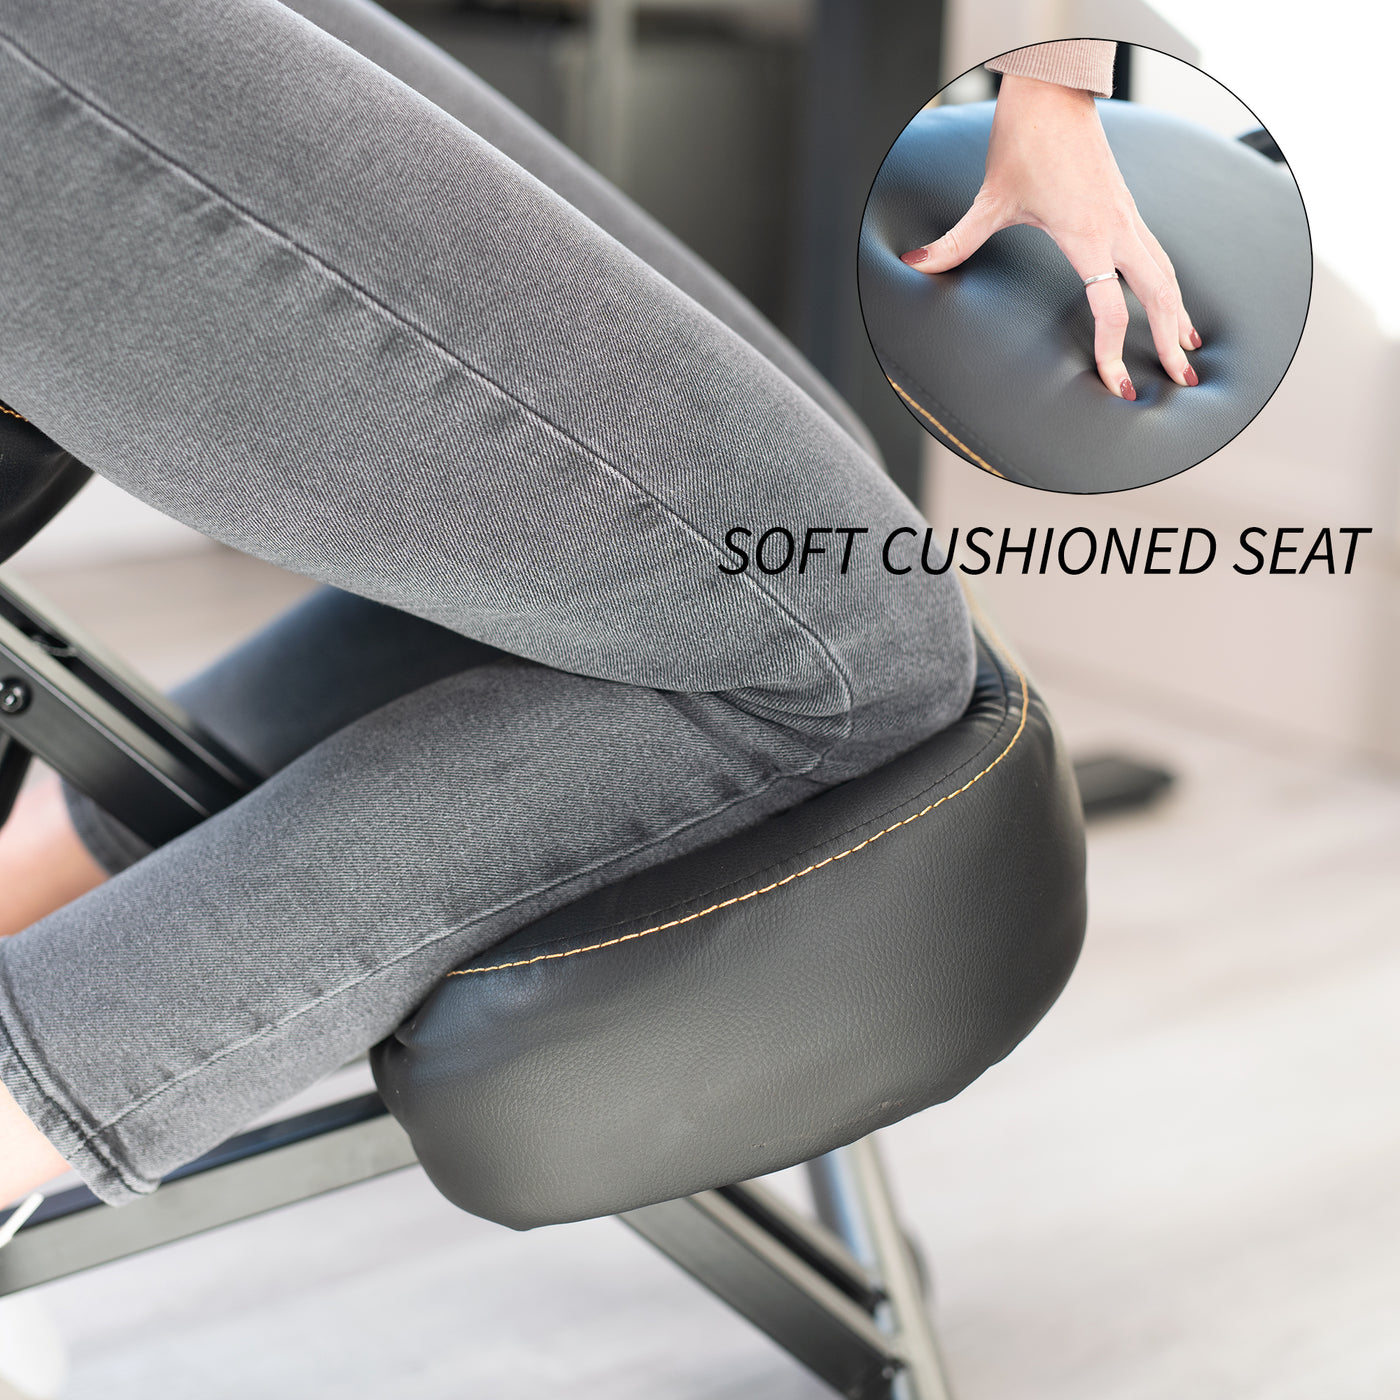 Adjustable Ergonomic Kneeling Chair with Back Support —